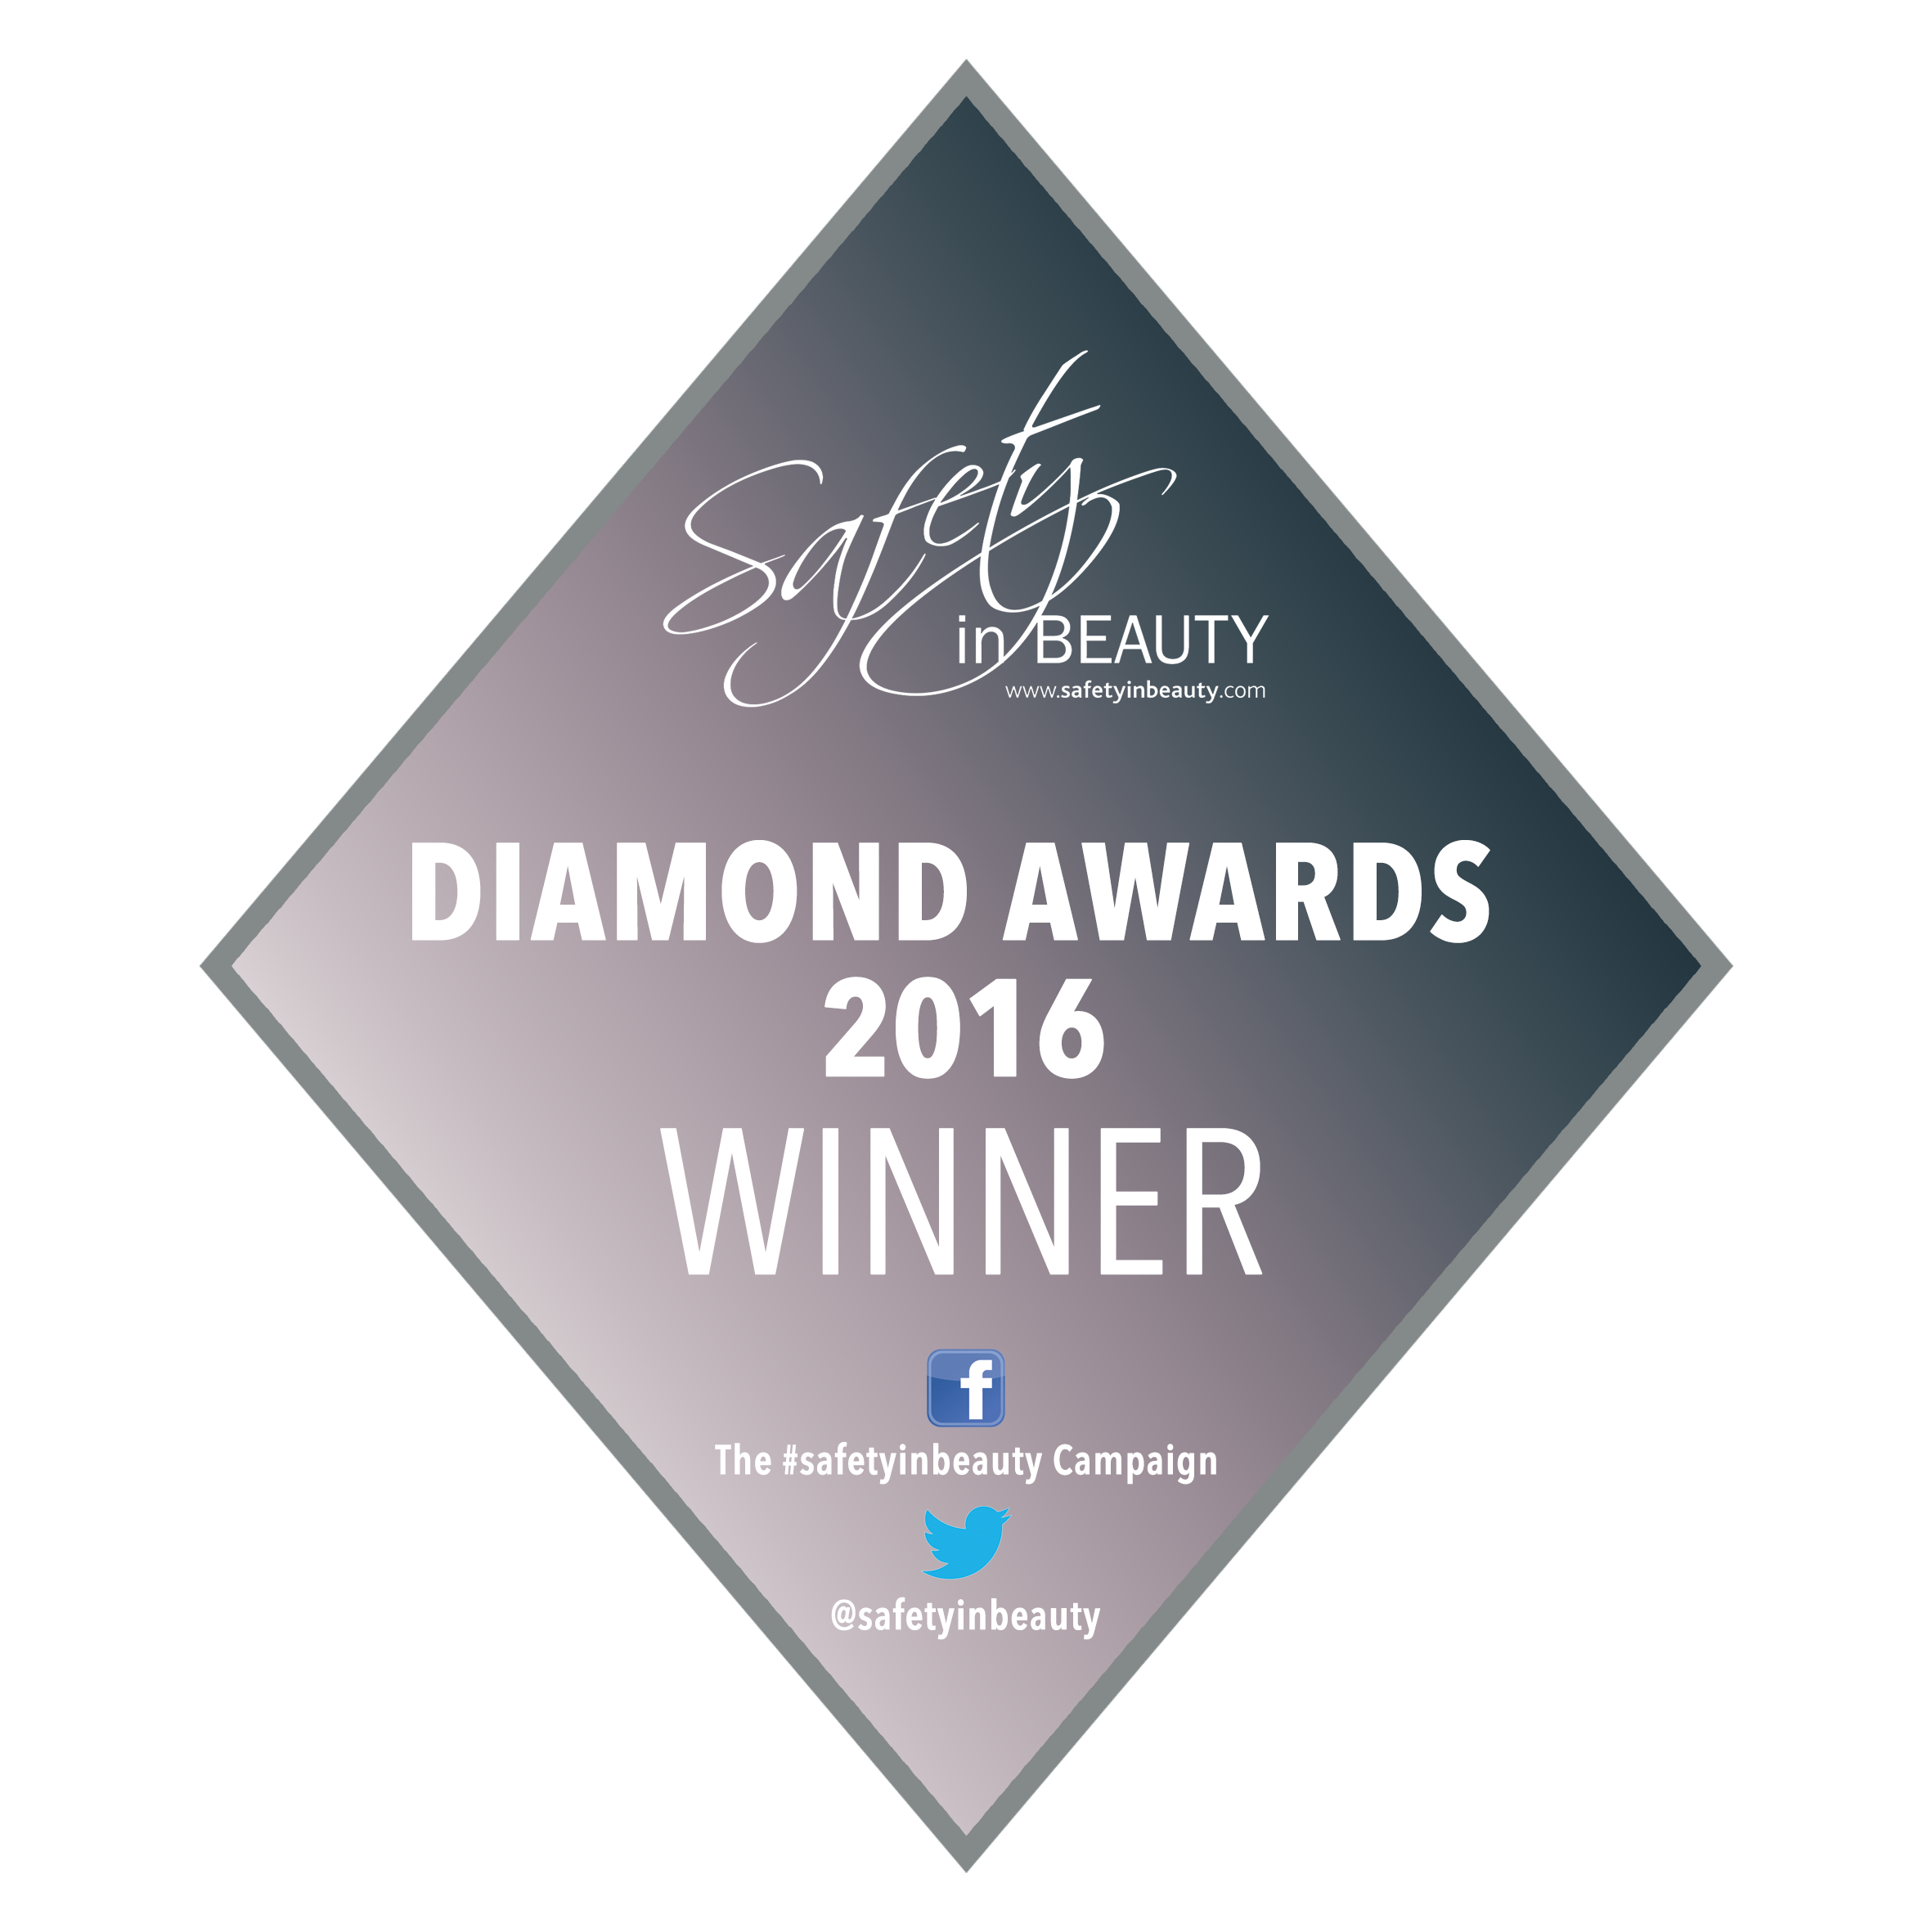 Safety in Beauty Diamond Award 2016